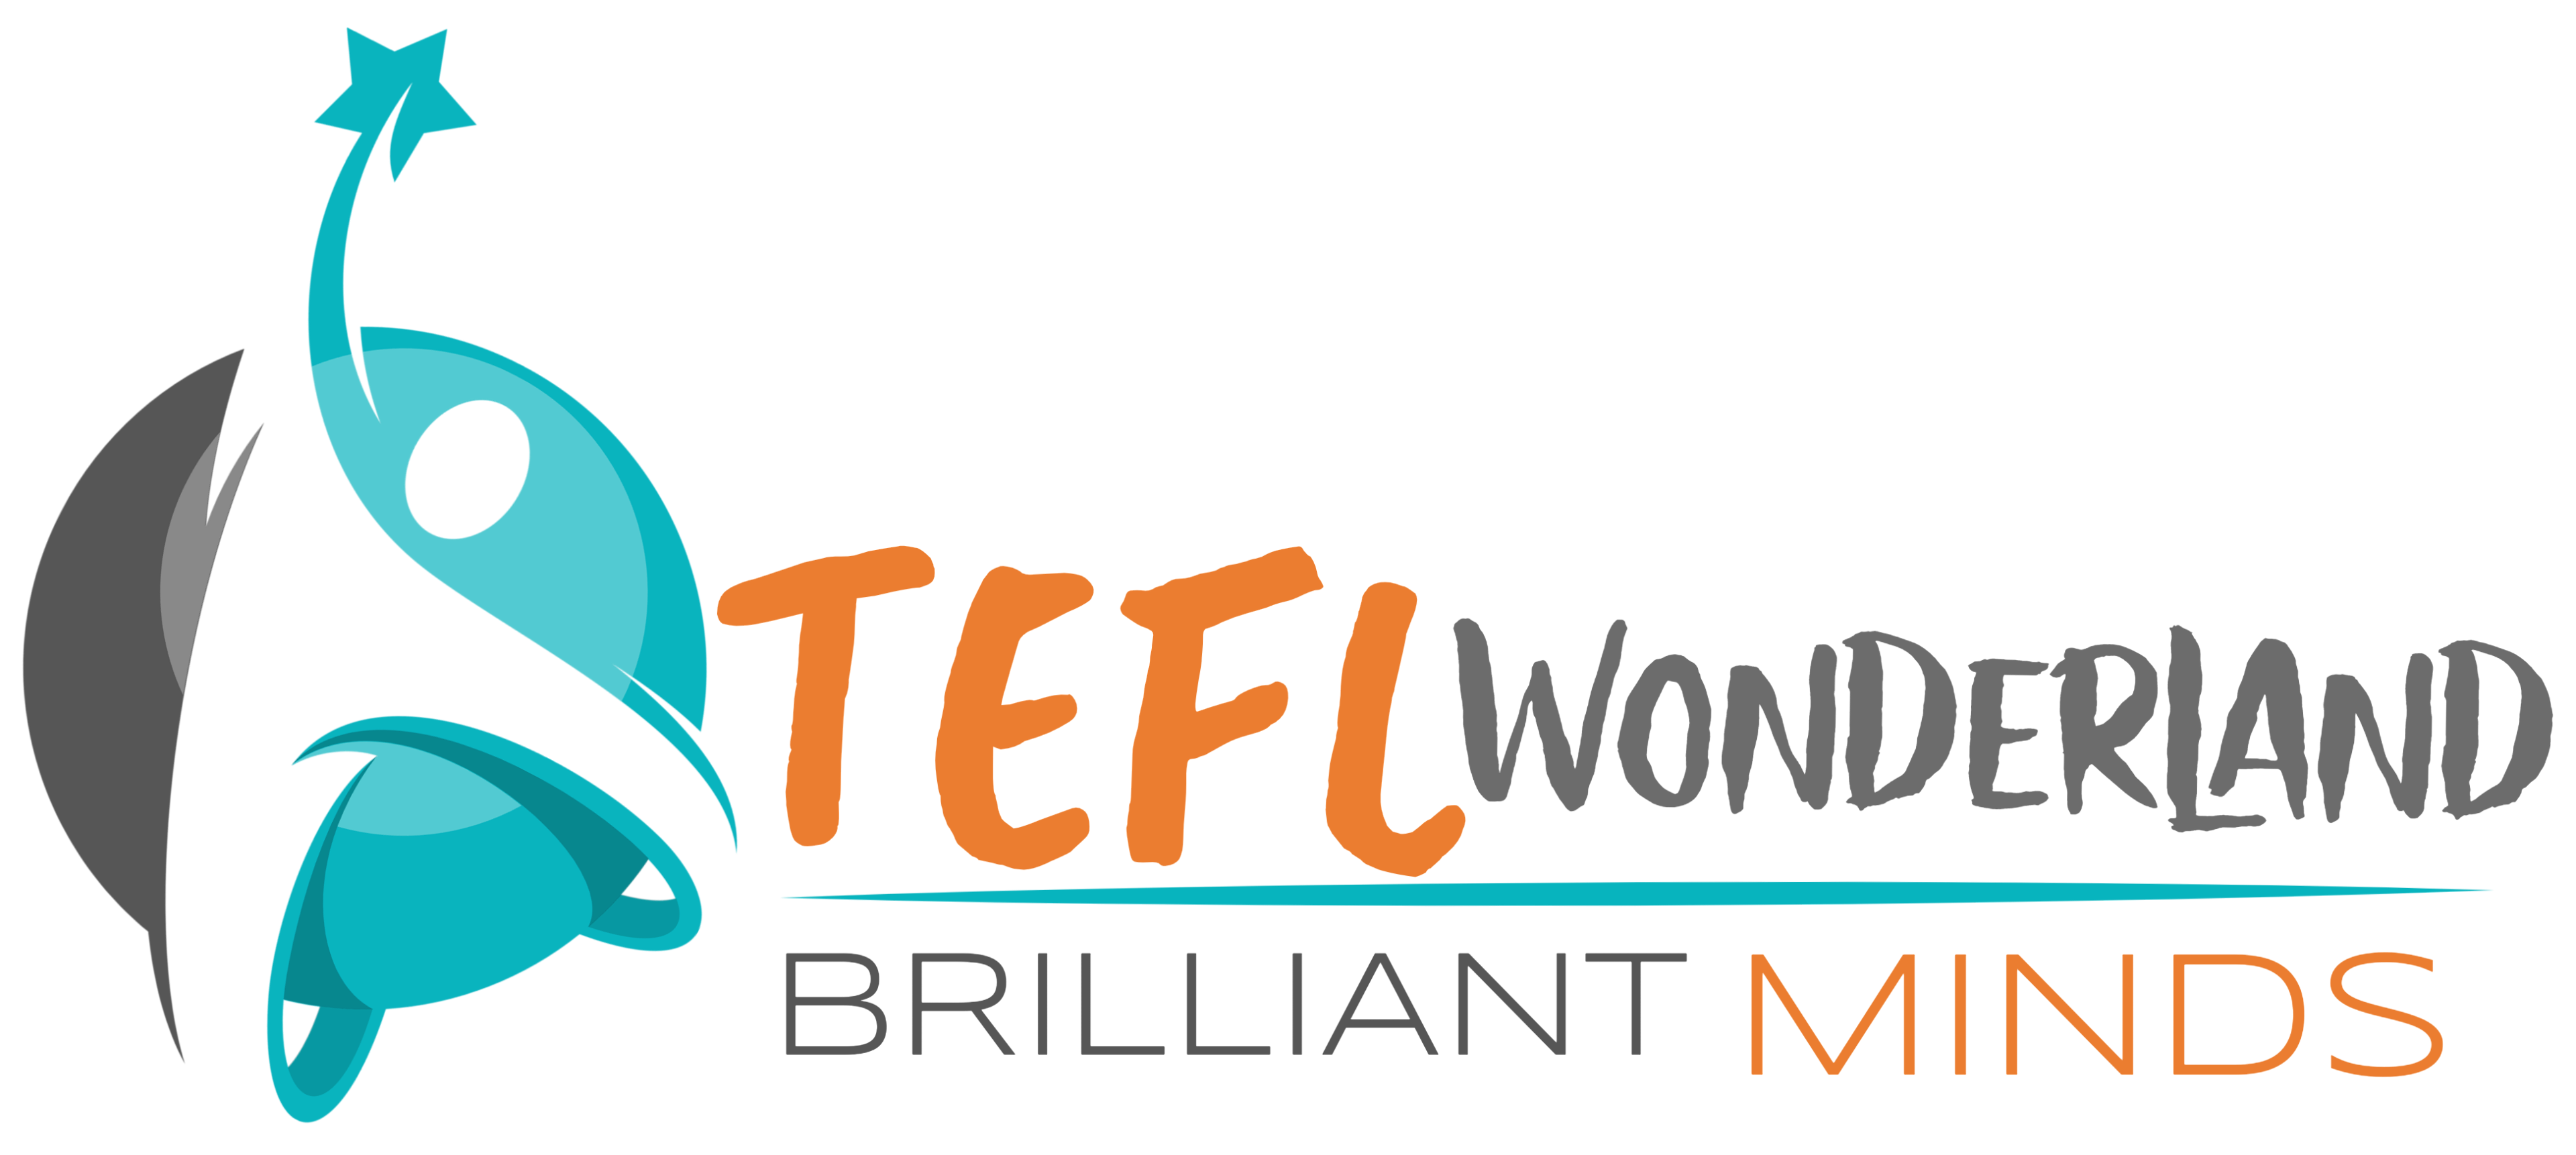 TEFL Wonderland - Brilliant Minds